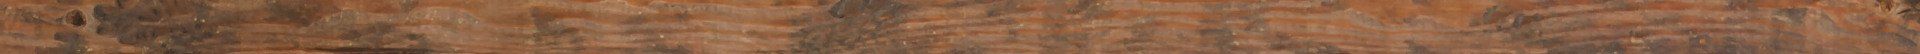 Wood grain texture image